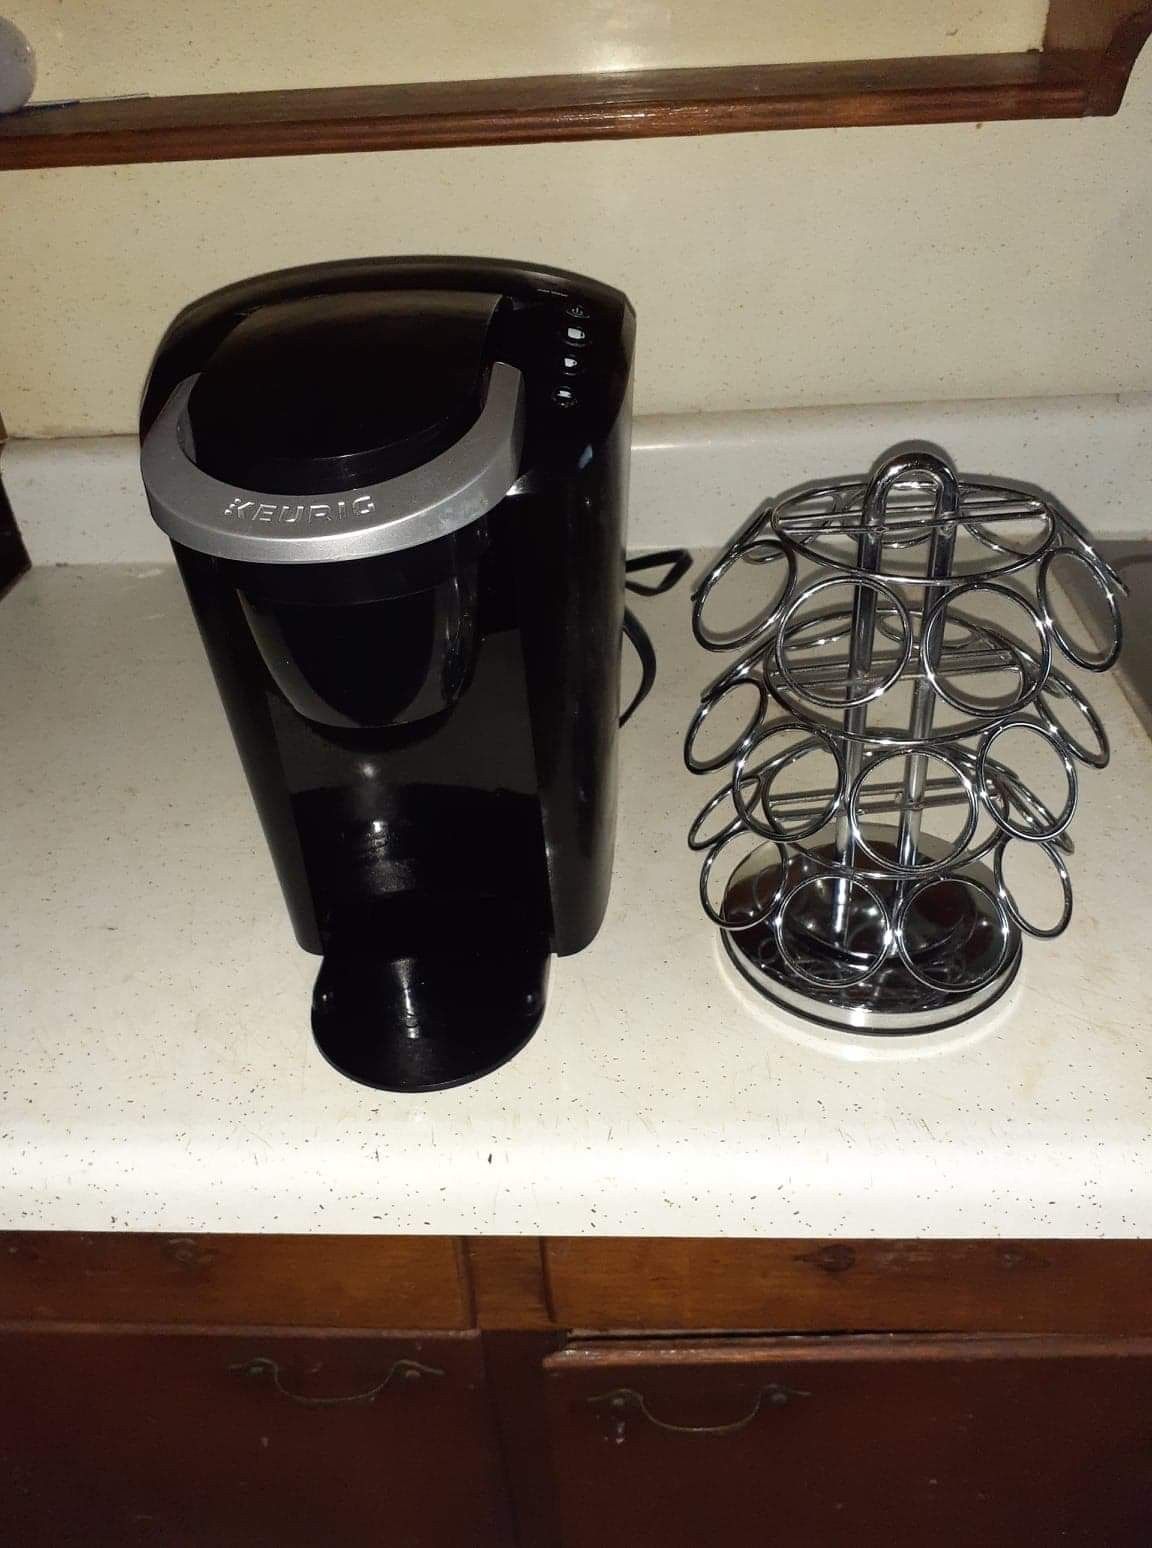 Keurig coffee maker with coffee pot holders